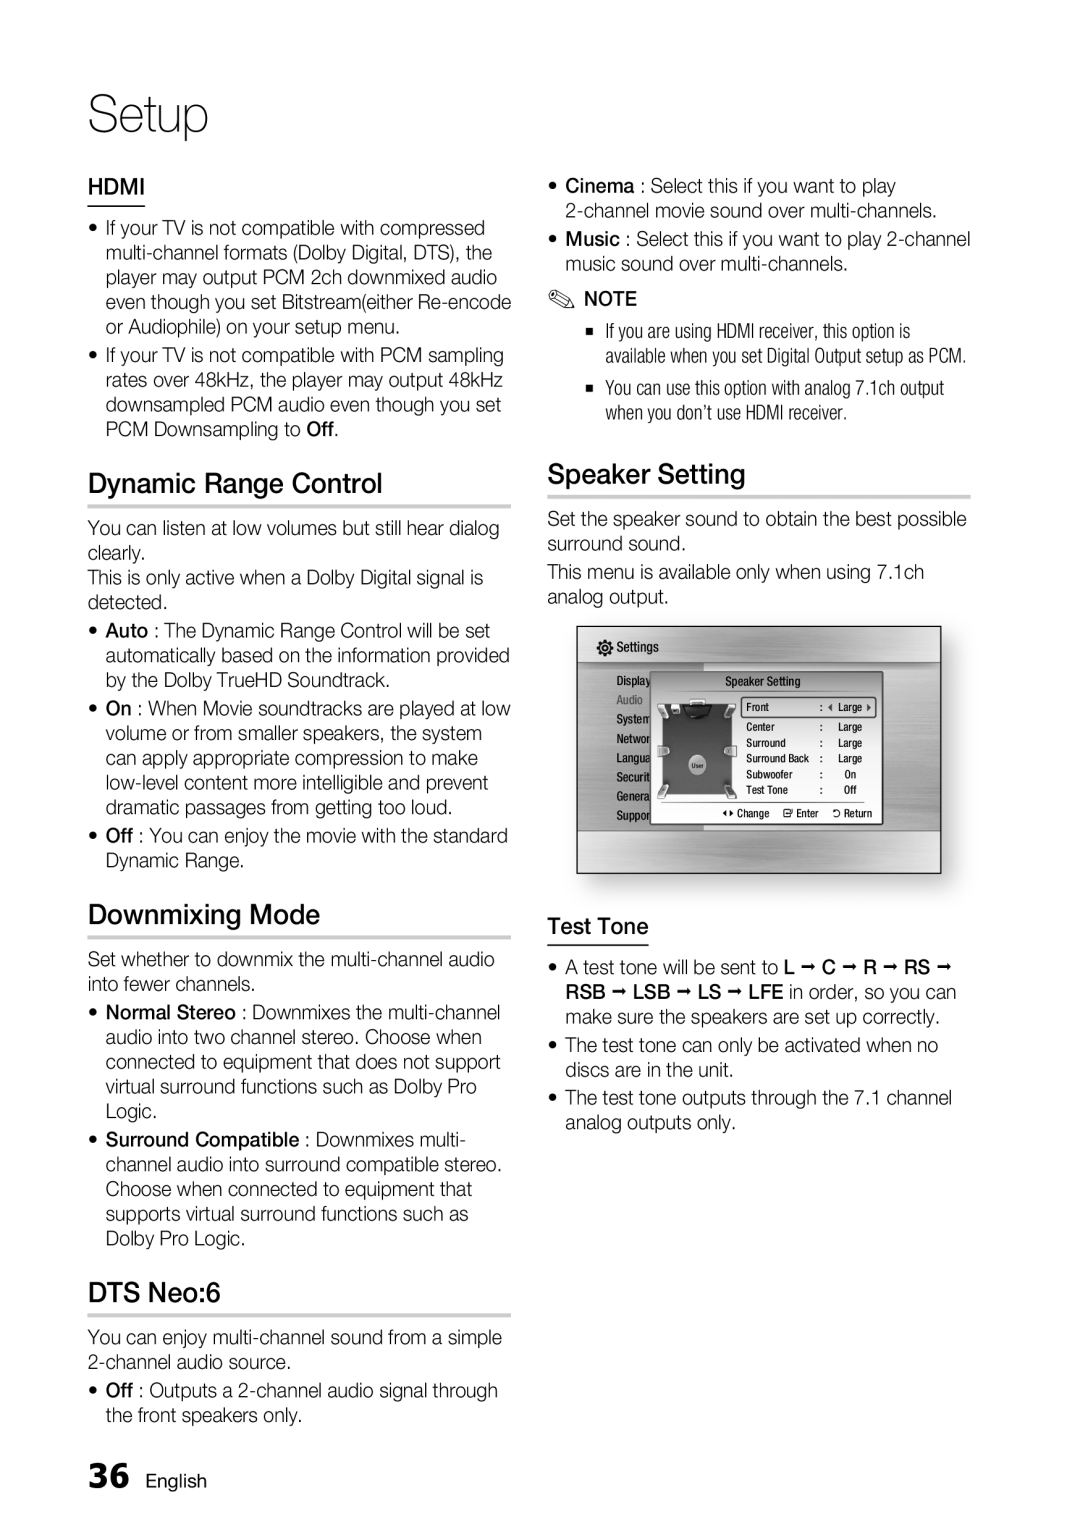 Samsung BD-C6500/EDC manual Dynamic Range Control, Downmixing Mode, DTS Neo6, Speaker Setting, Hdmi, Test Tone, Setup 